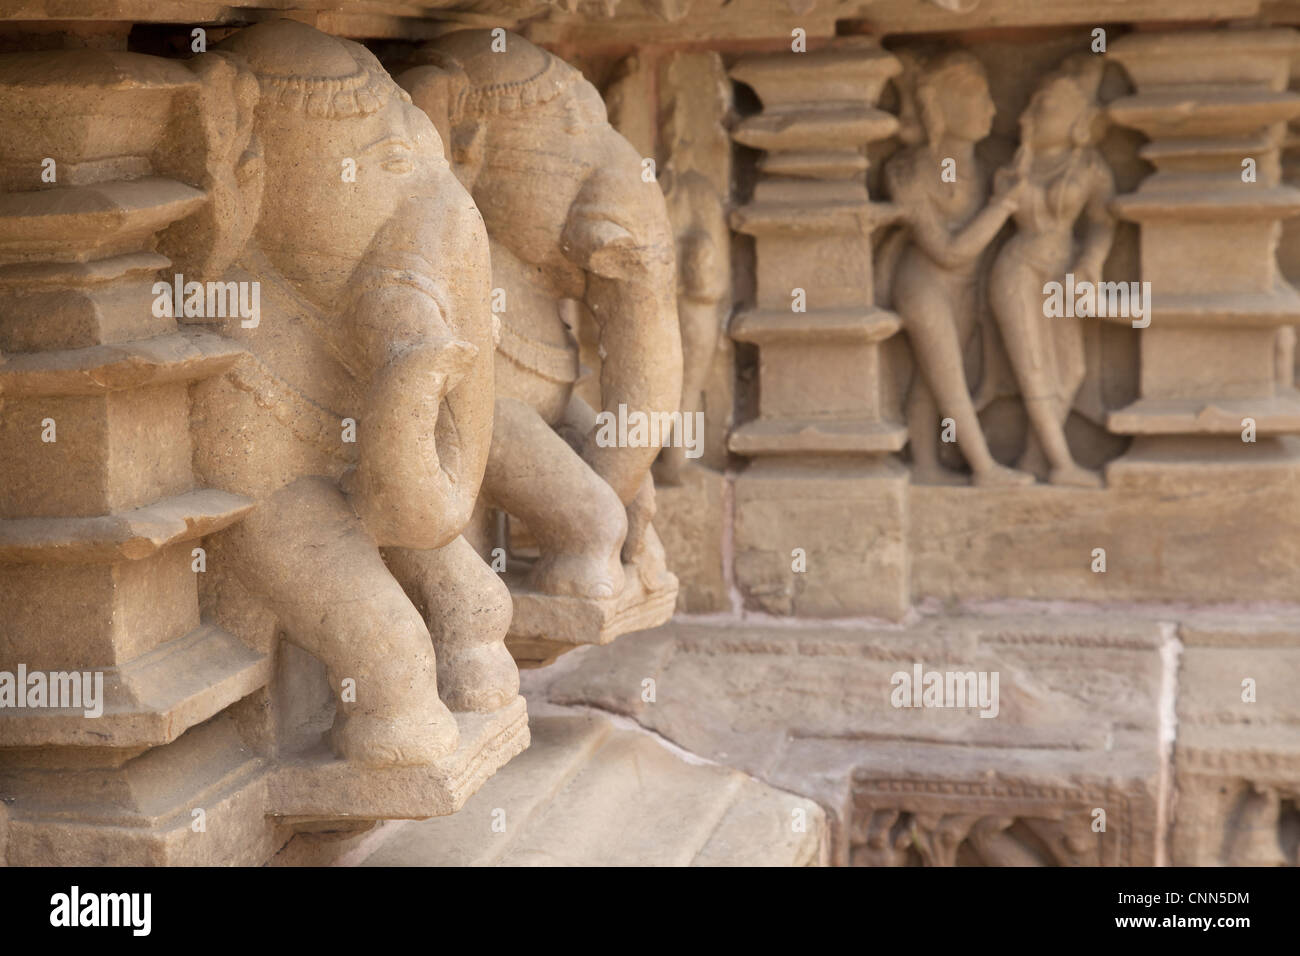 Chandella dynasty temple with elephant sculptures, Lakshmana Temple, Khajuraho, Madhya Pradesh, India Stock Photo